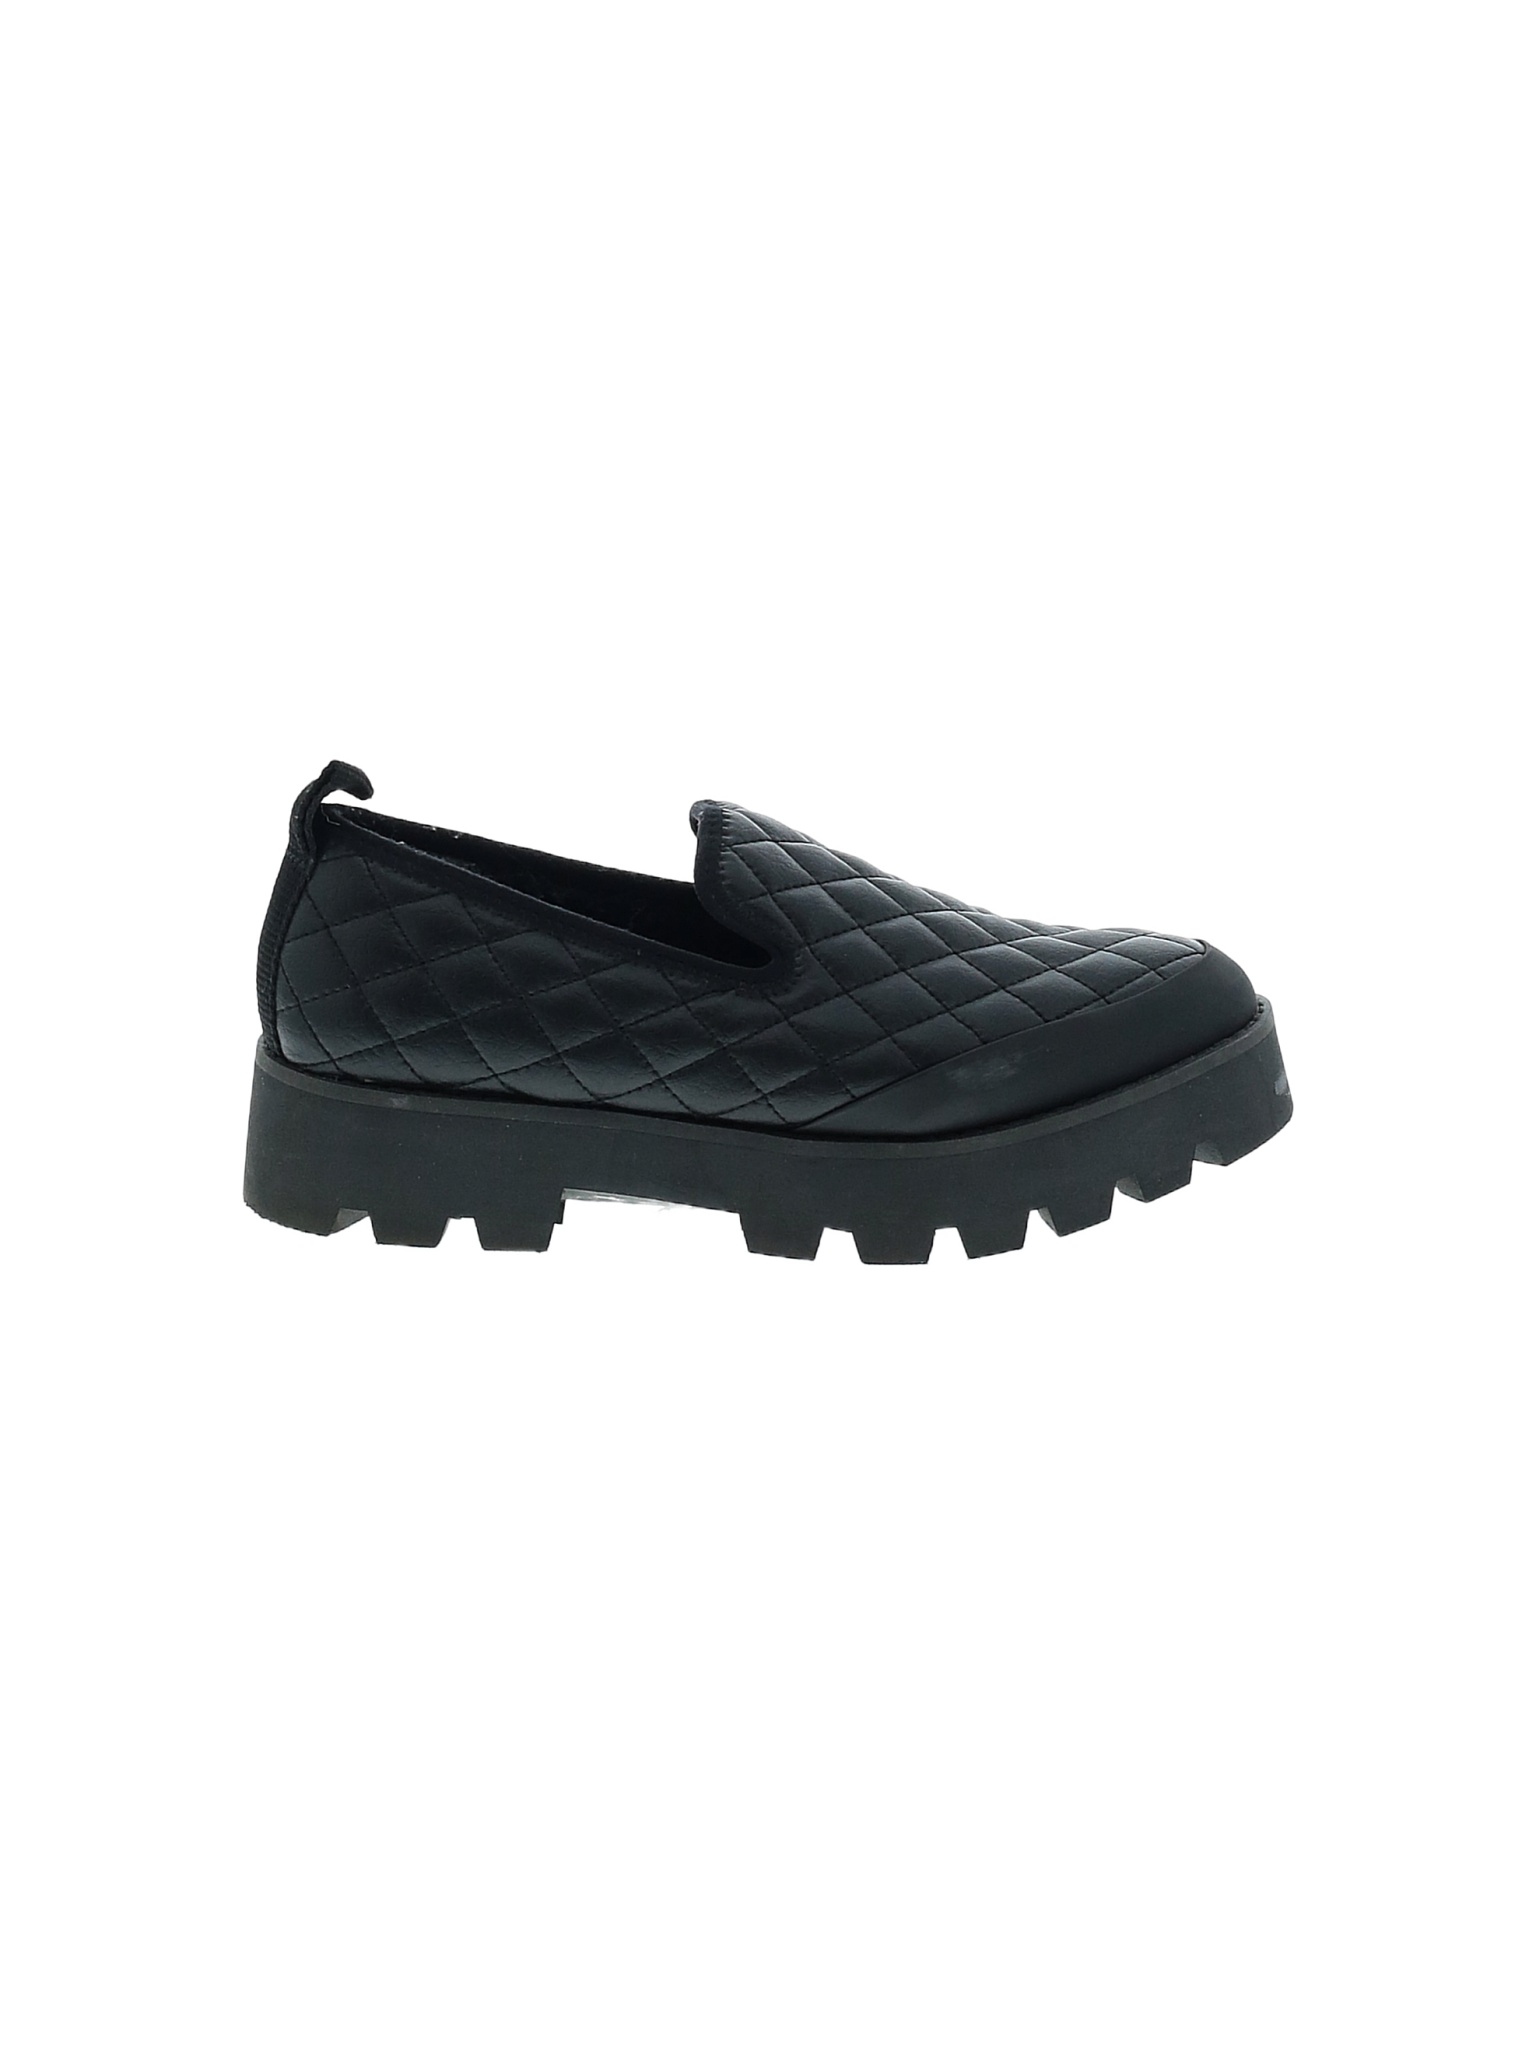 Franco Sarto Solid Black Sneakers Size 7 1/2 - 66% off | thredUP